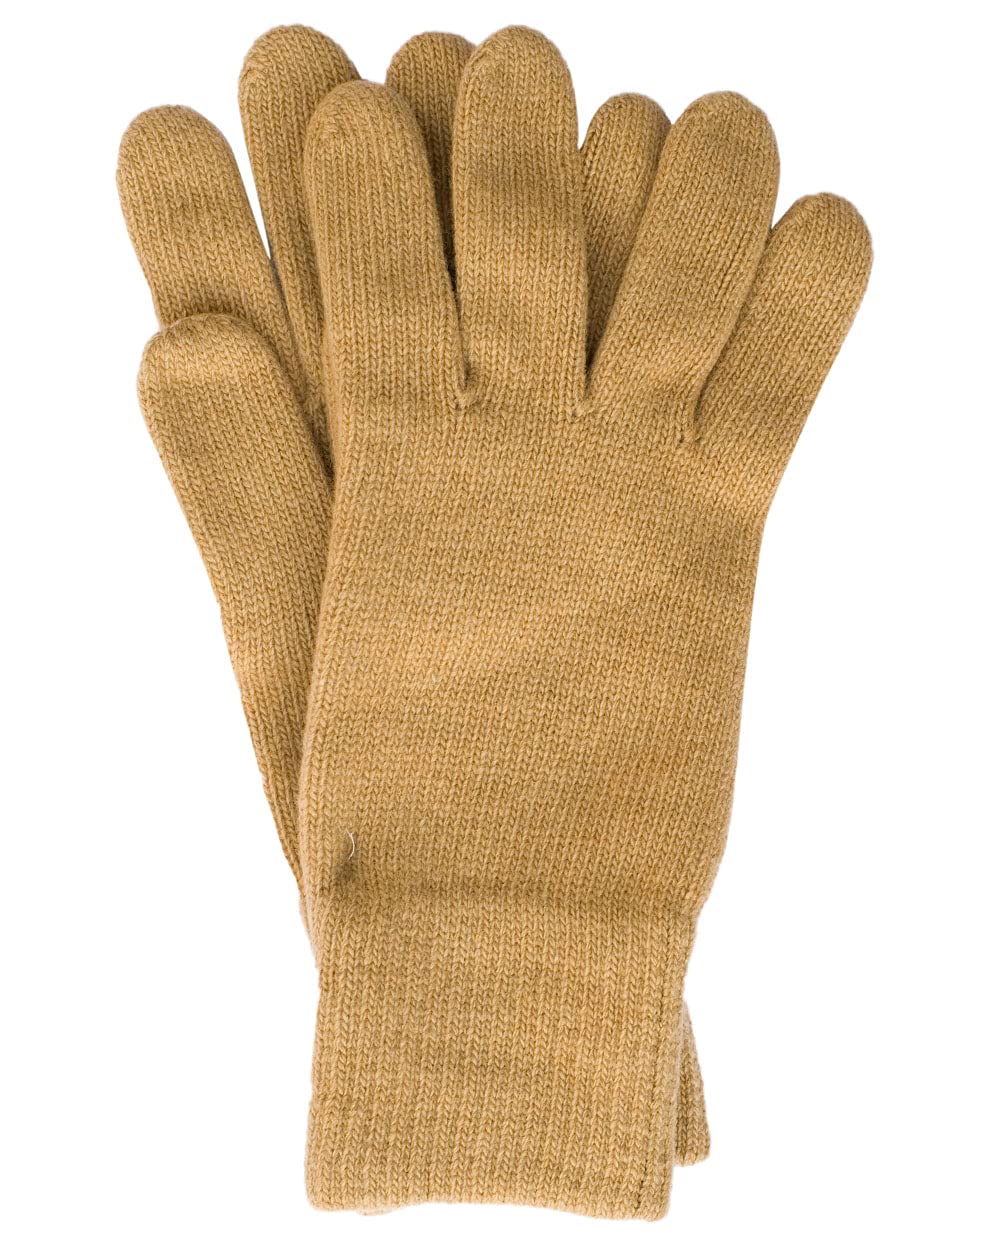 FosterNatur, Merino Herren Handschuhe/Fingerhandschuhe, 100% Wolle extrafine (9,5, Camel)